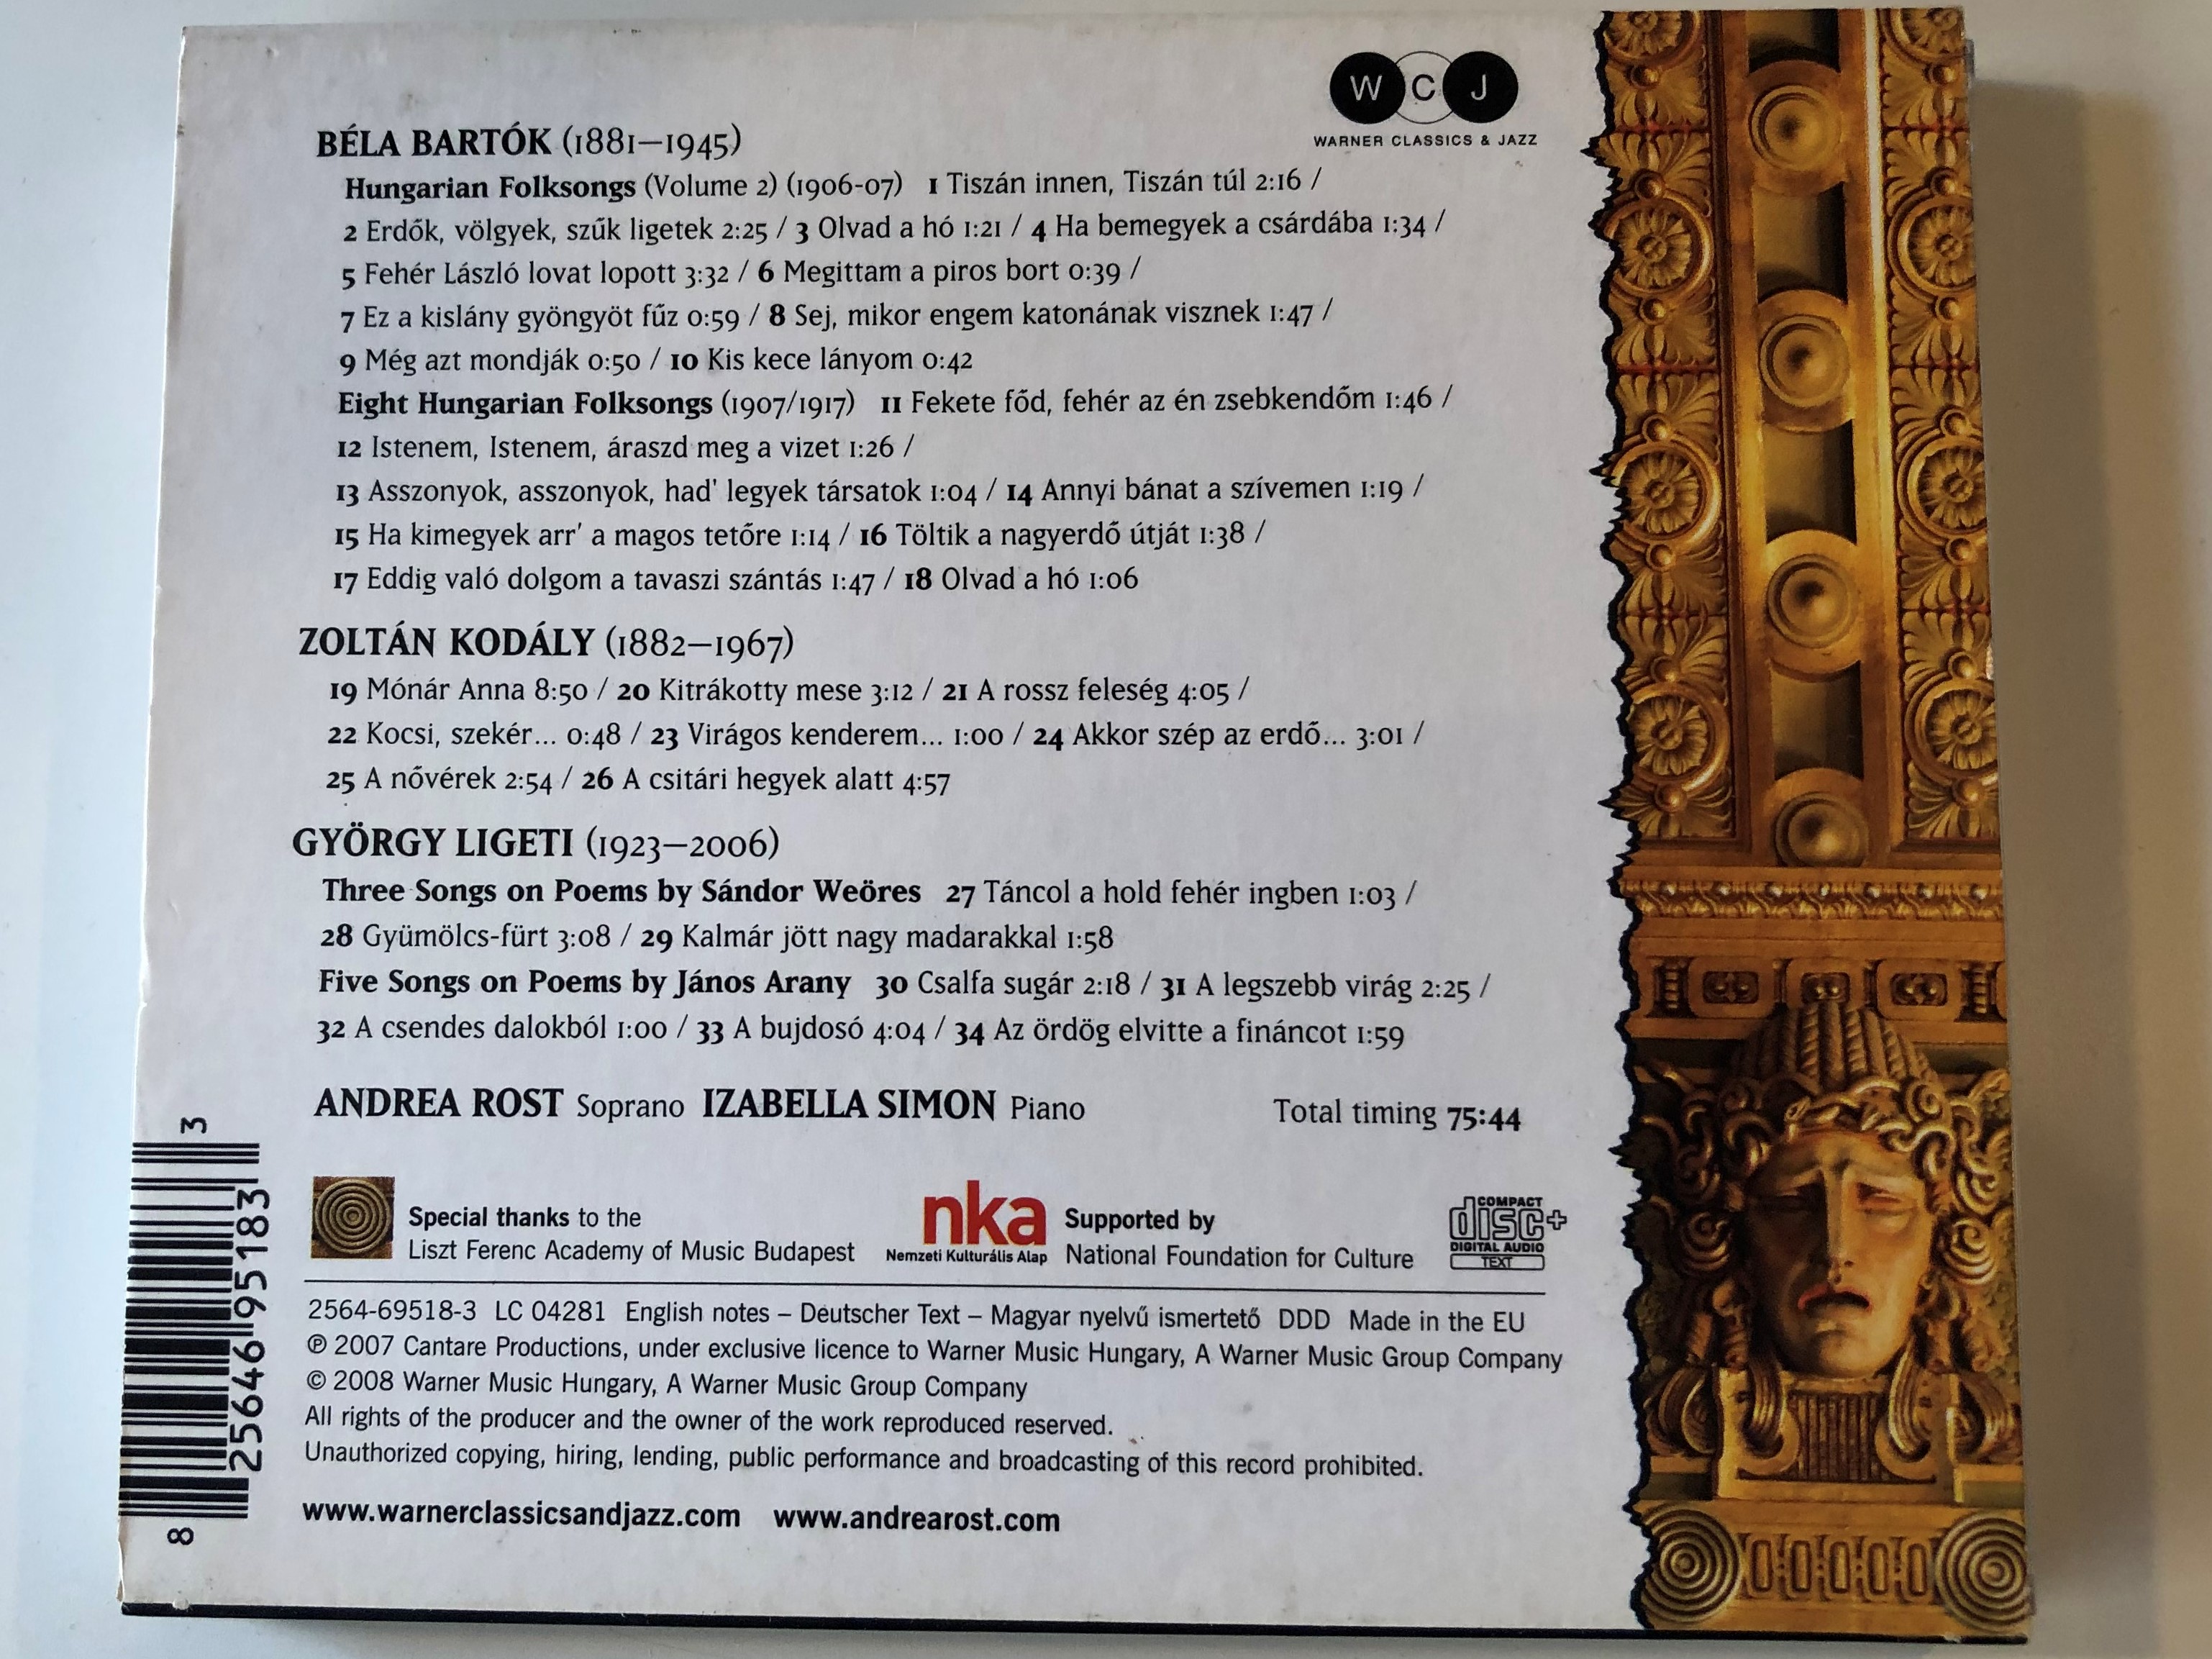 bartok-kodaly-ligeti-hungarian-songs-andrea-rost-izabella-simon-piano-warner-classics-and-jazz-audio-cd-2008-2564-69518-3-2-.jpg